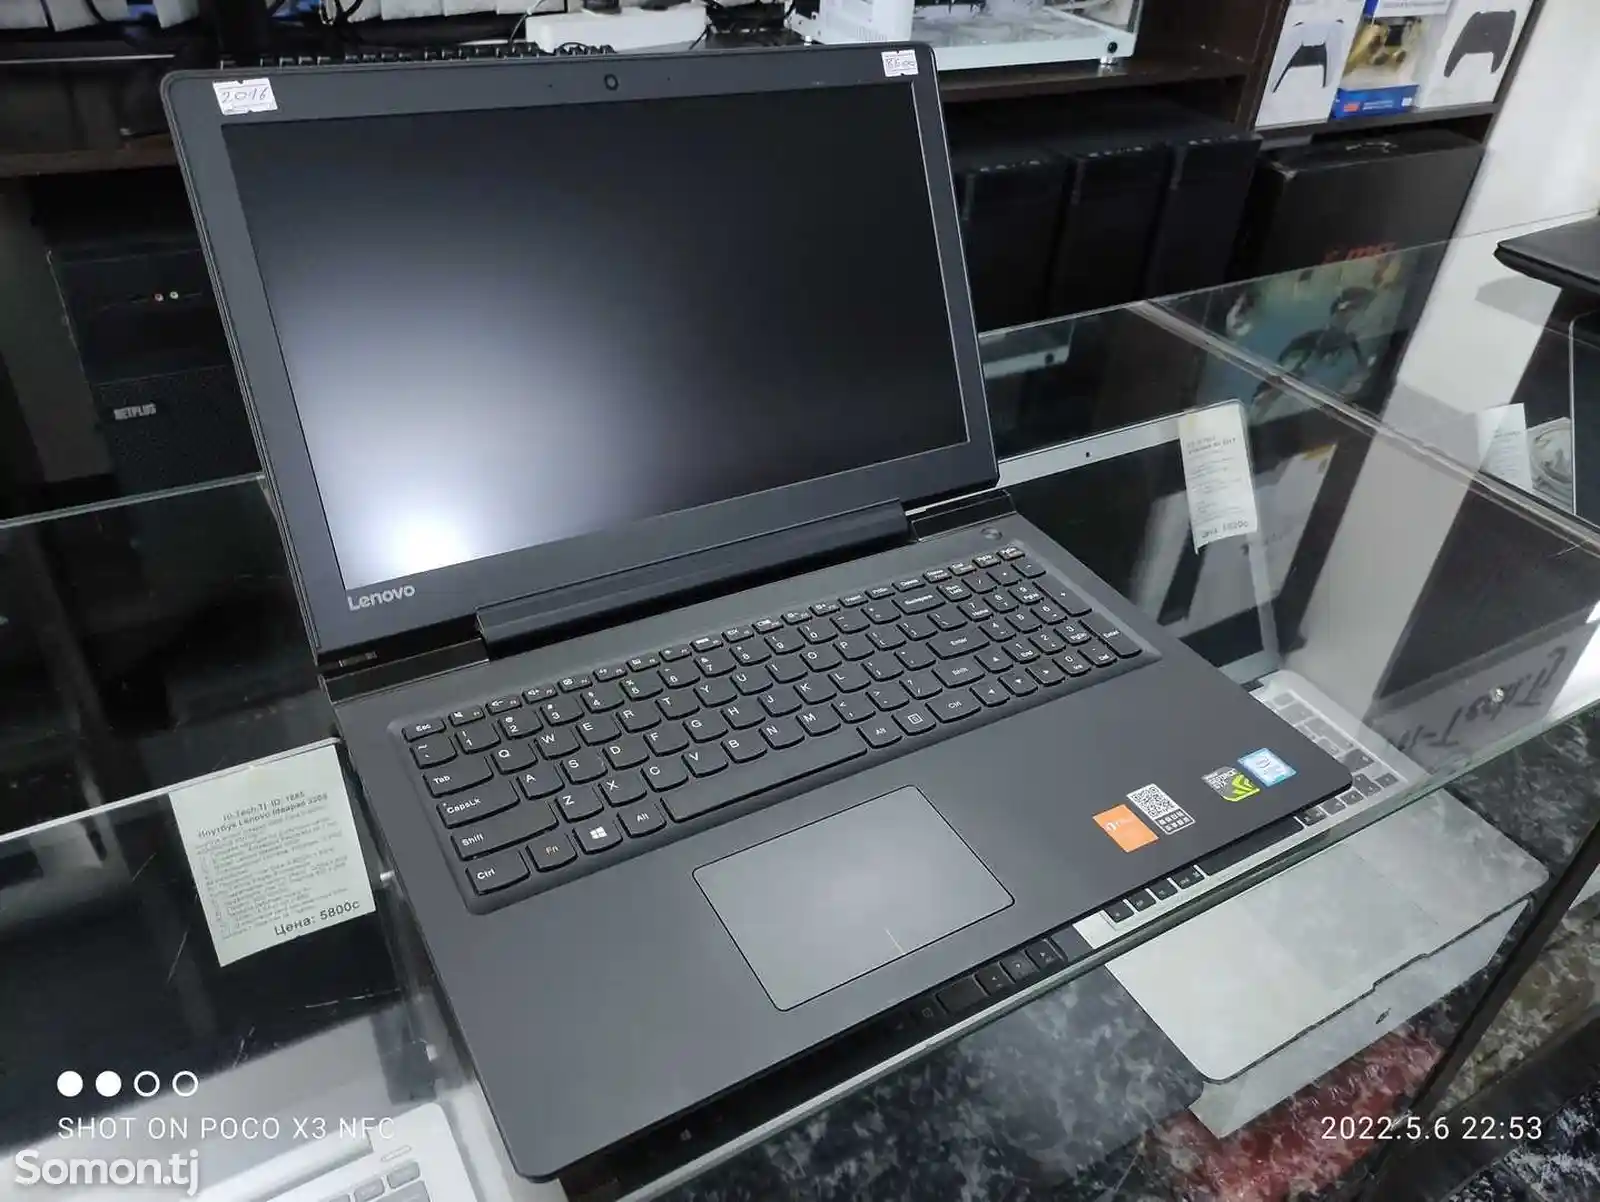 Игровой ноутбук Lenovo Ideapad 700 Gaming Core i5-6300HQ GTX 950M 4GB-2